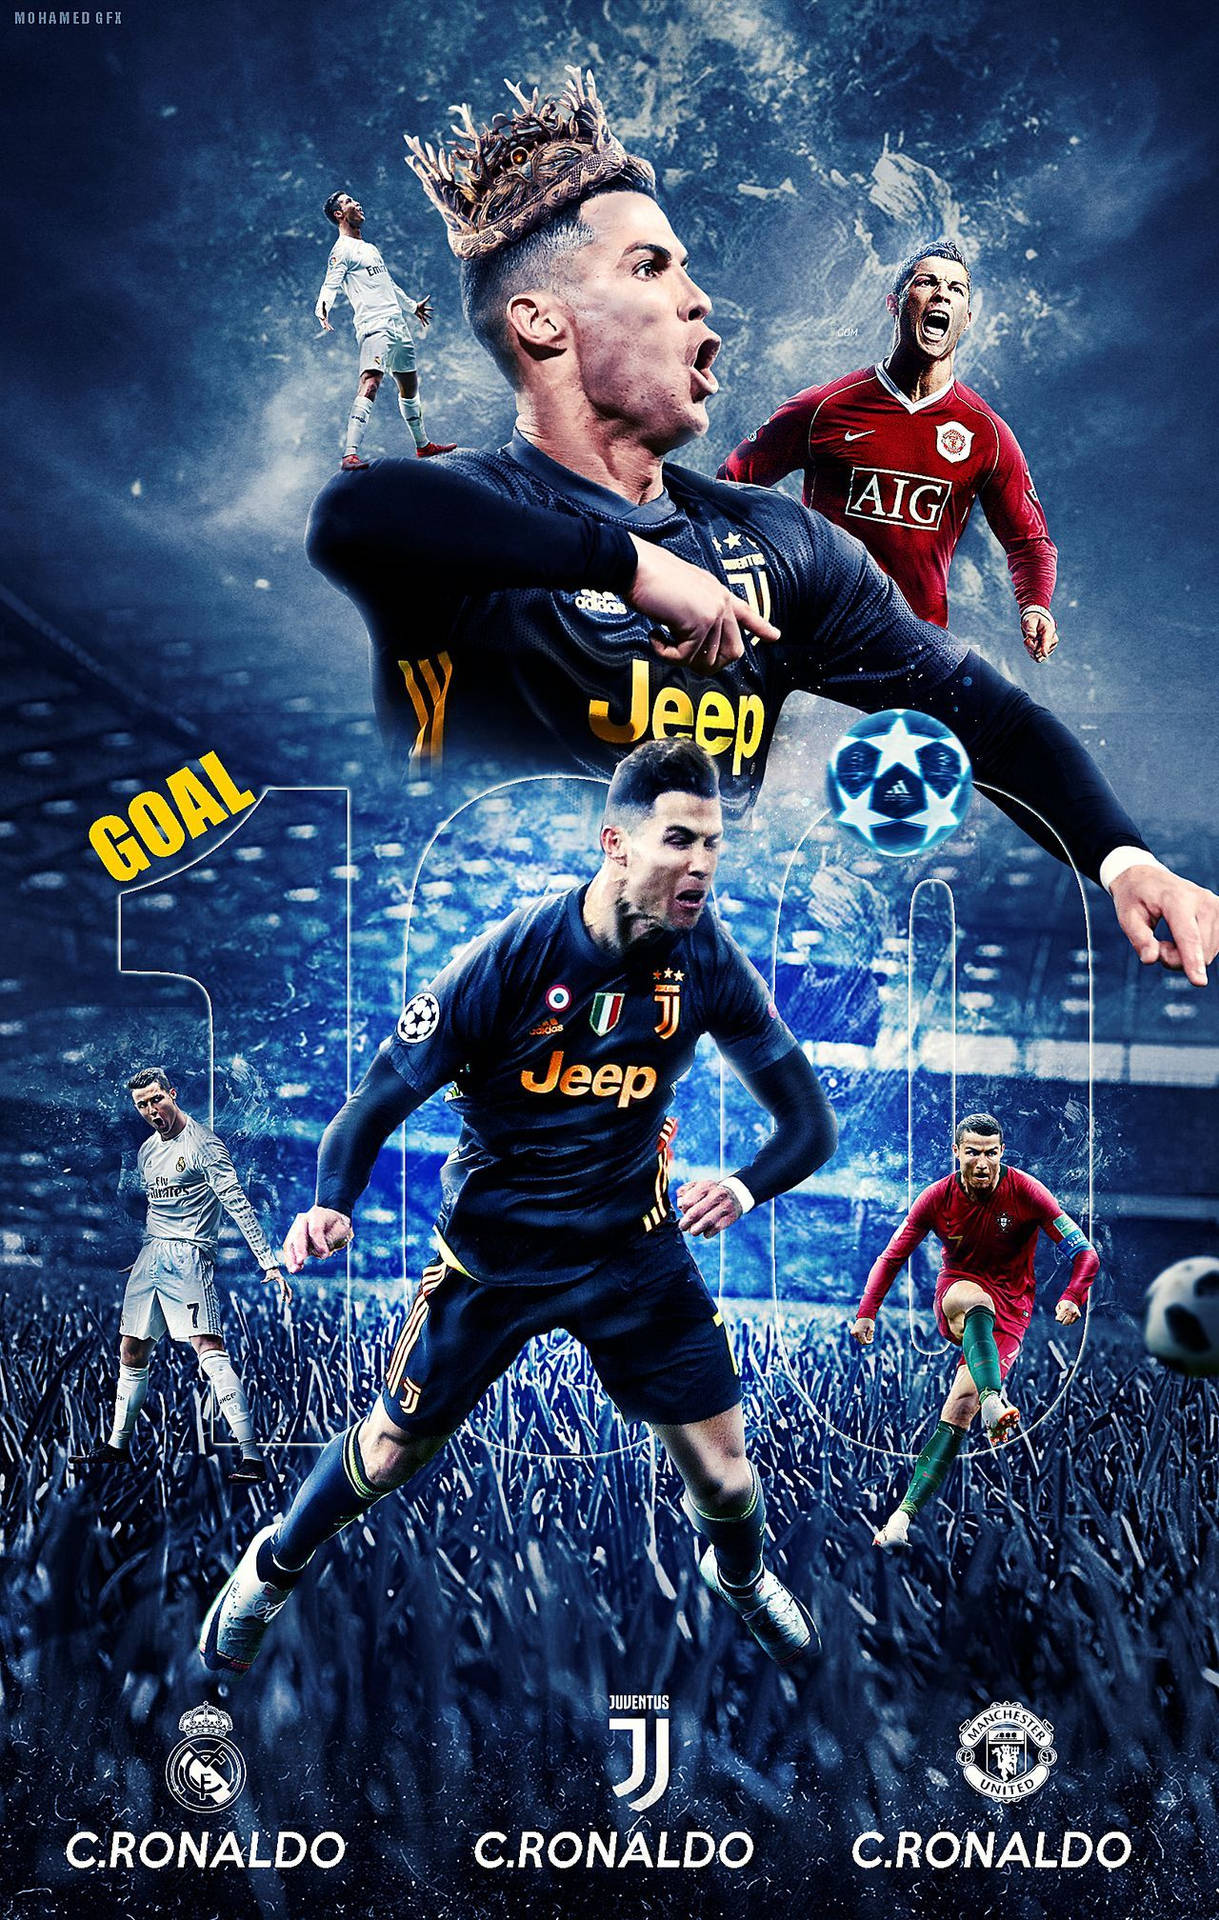 About: Soccer Ronaldo Wallpaper CR7 (Google Play Version)